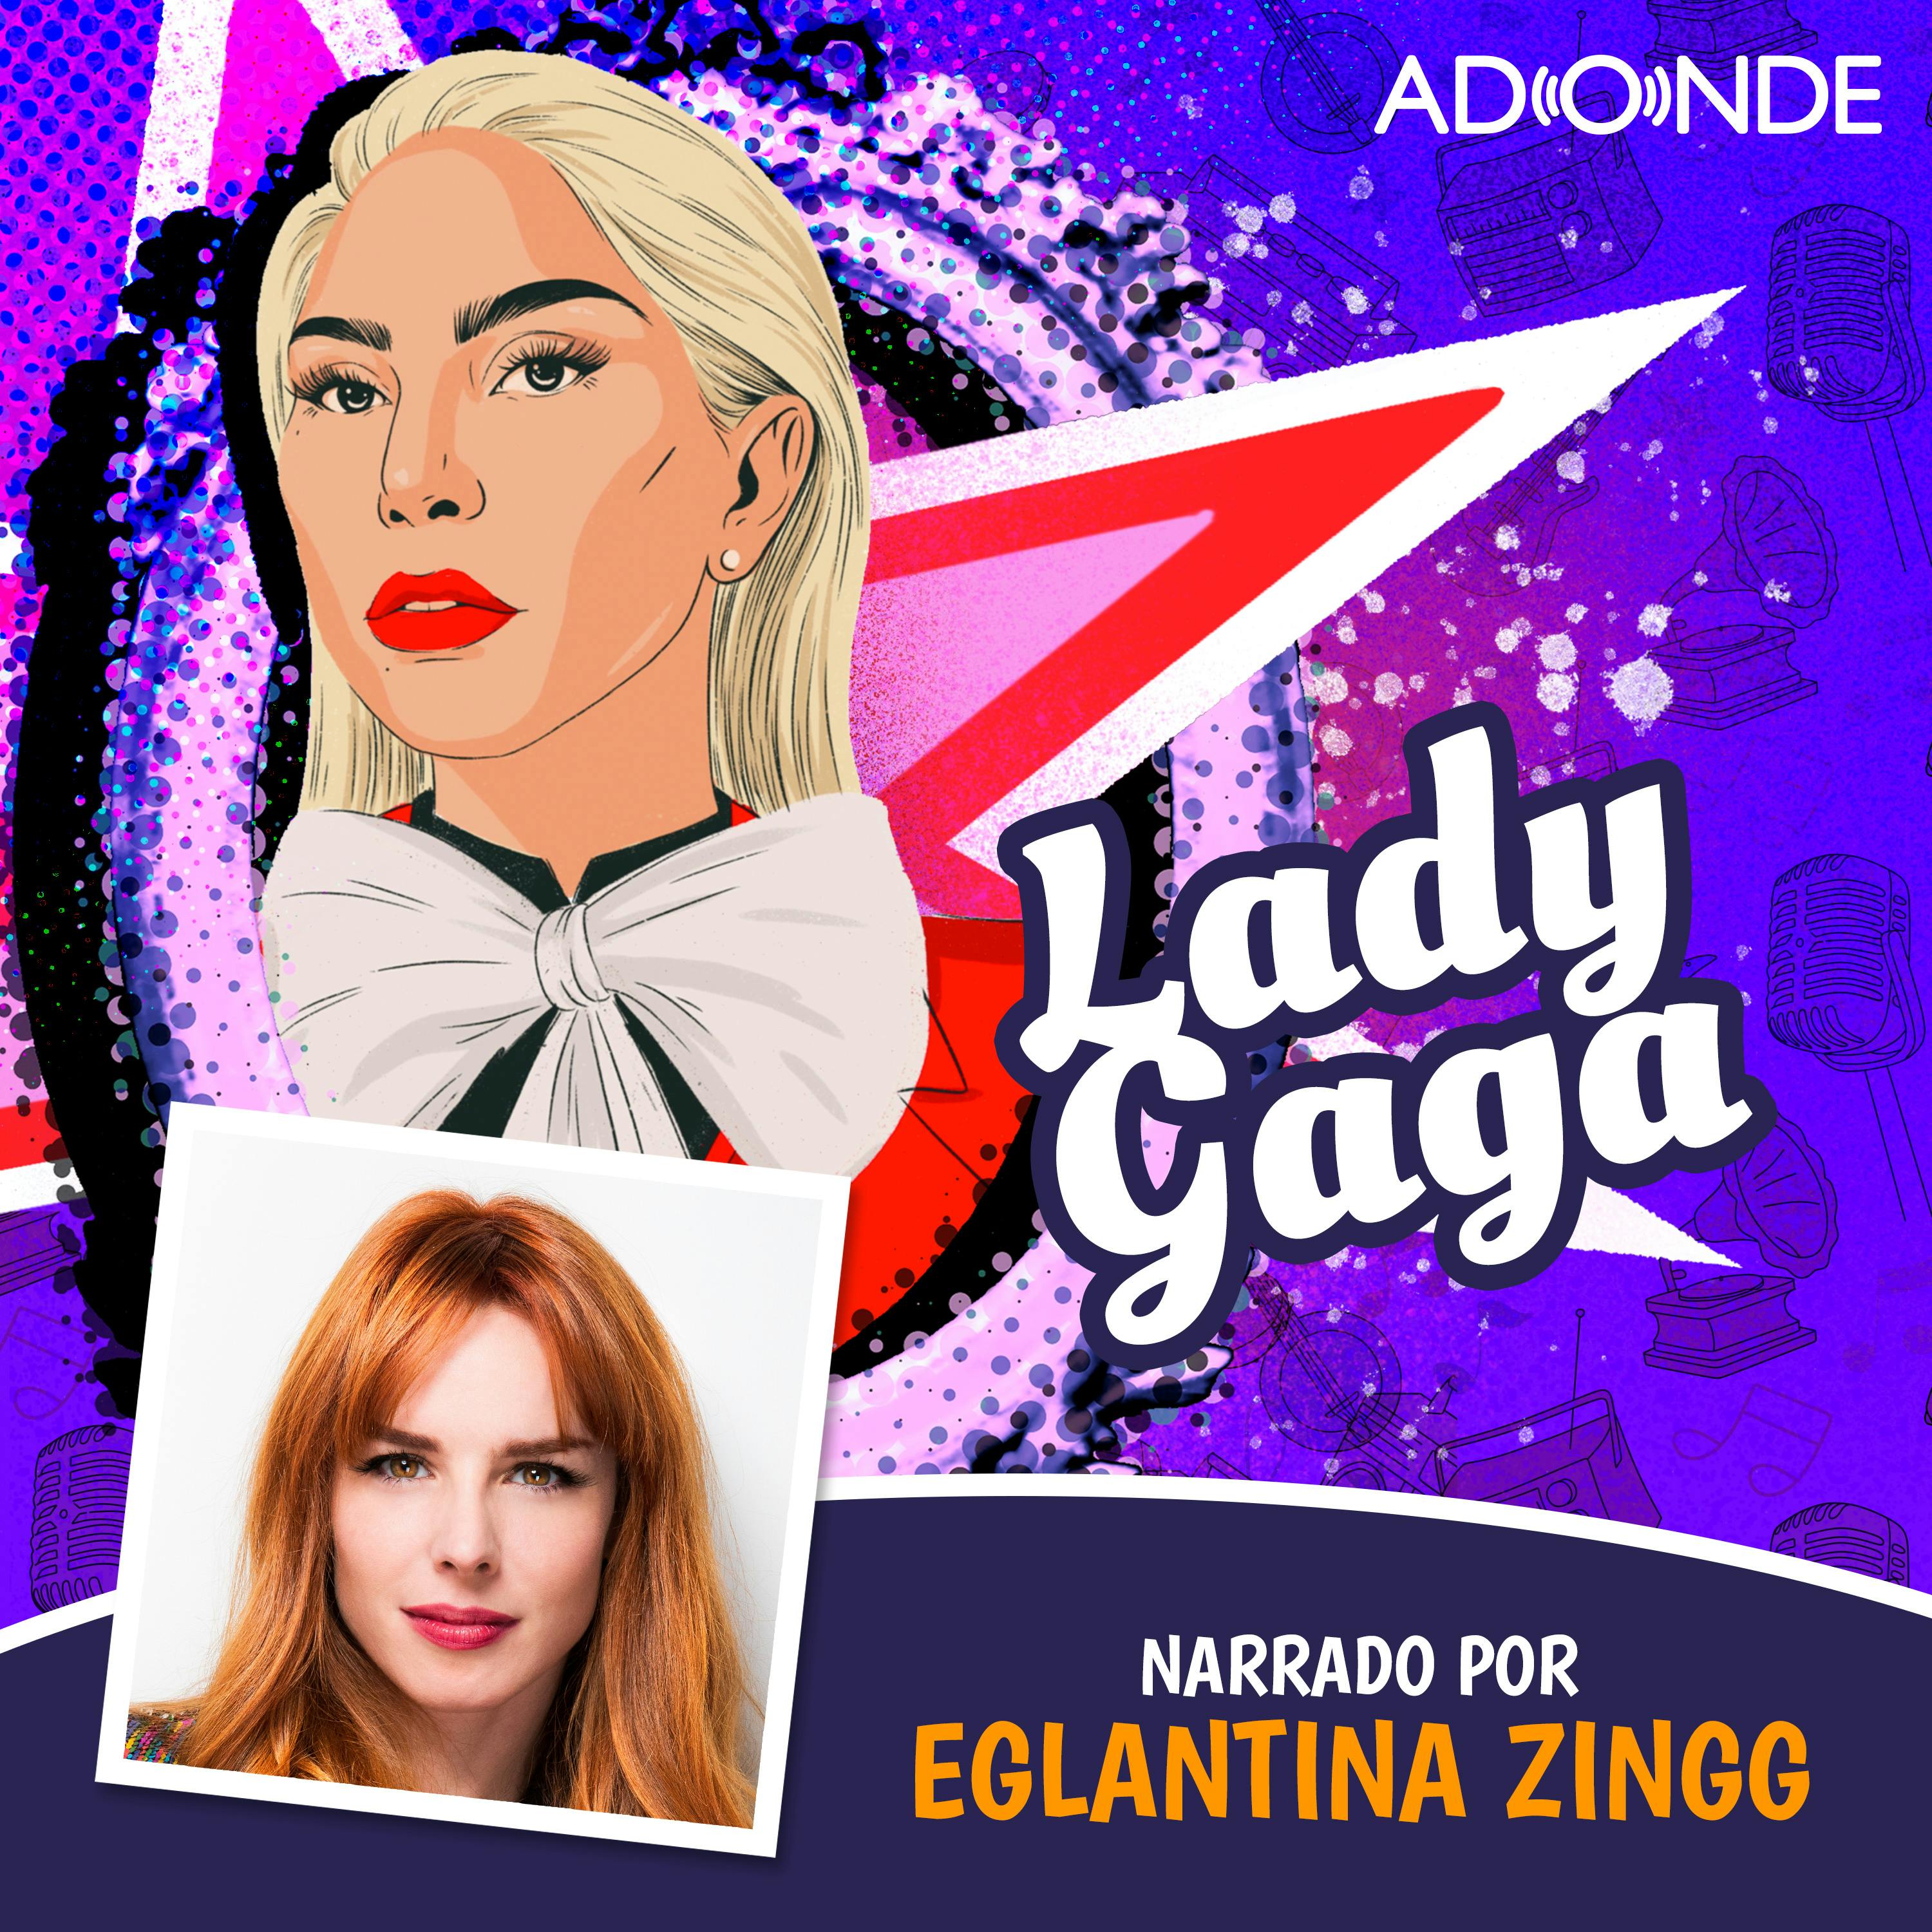 Lady Gaga narrado por Eglantina Zingg